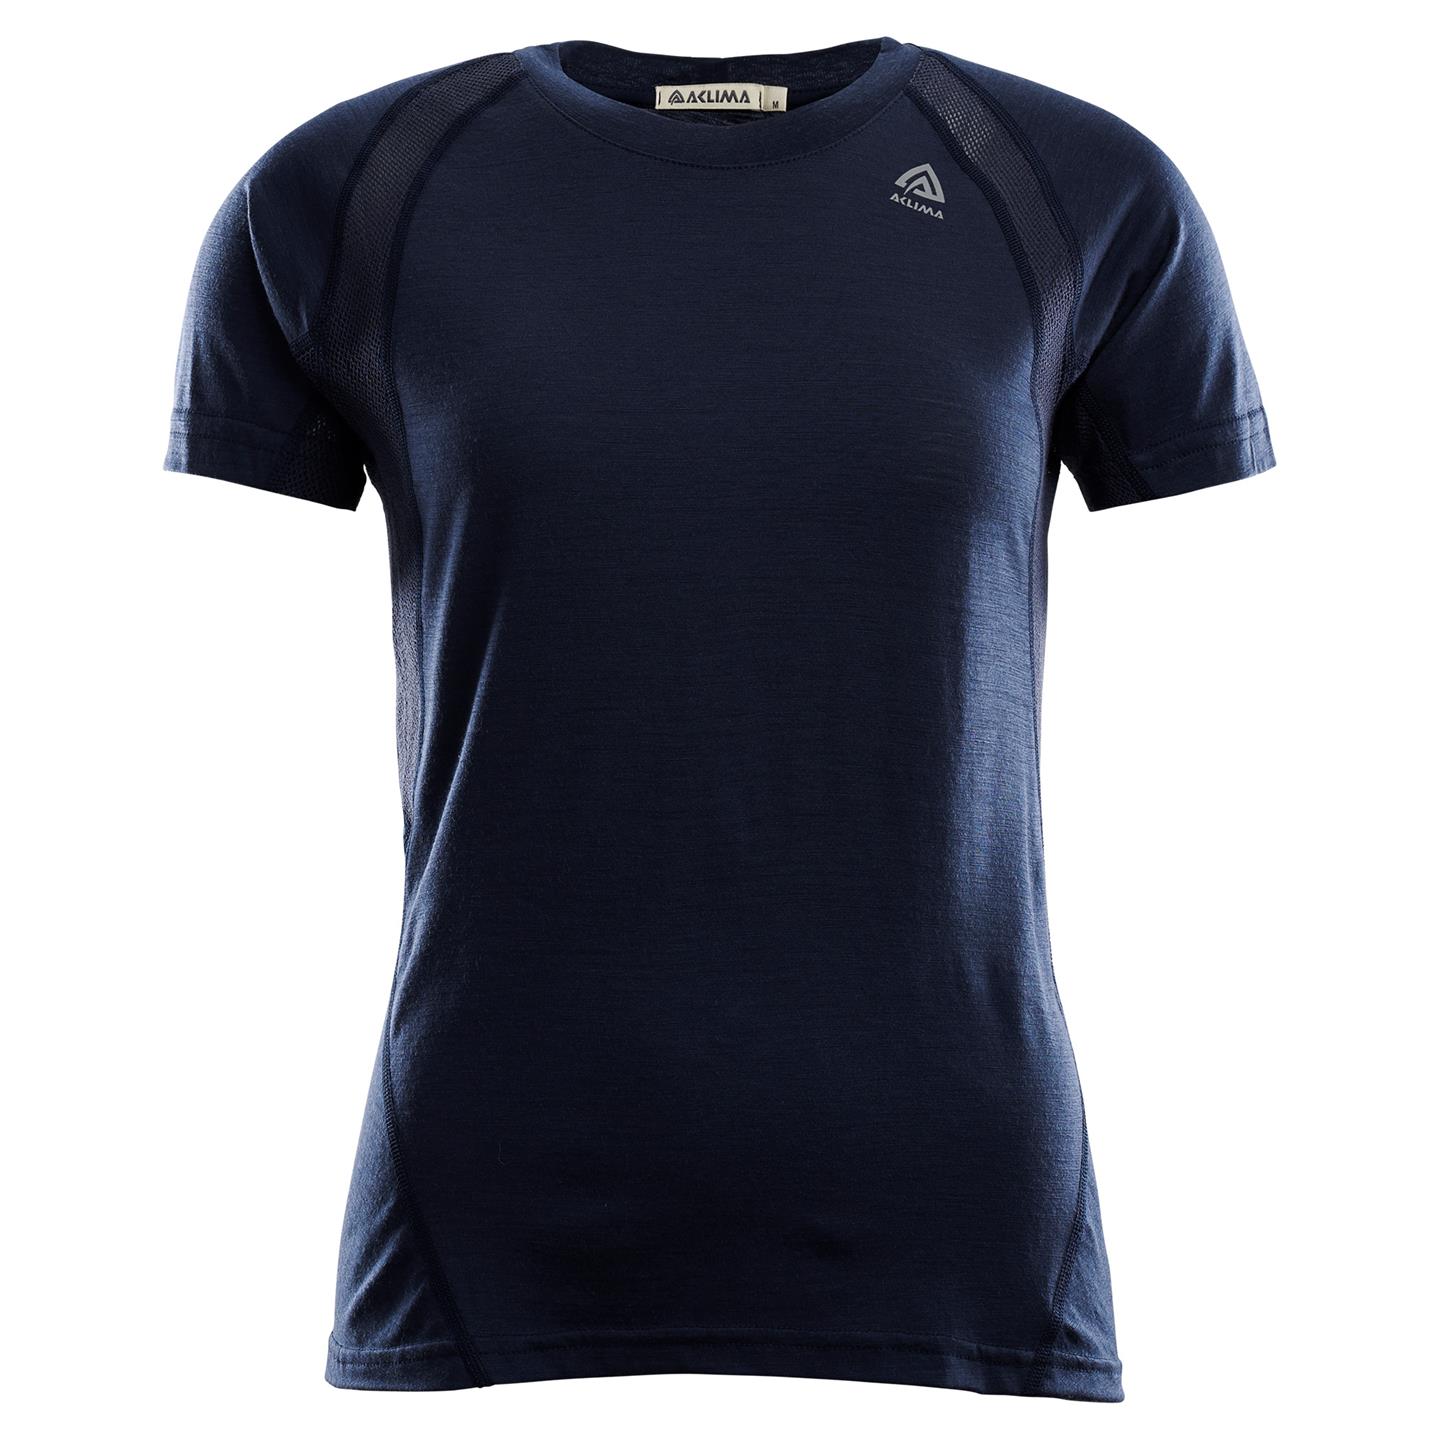 Lightwool sports T-shirt woman